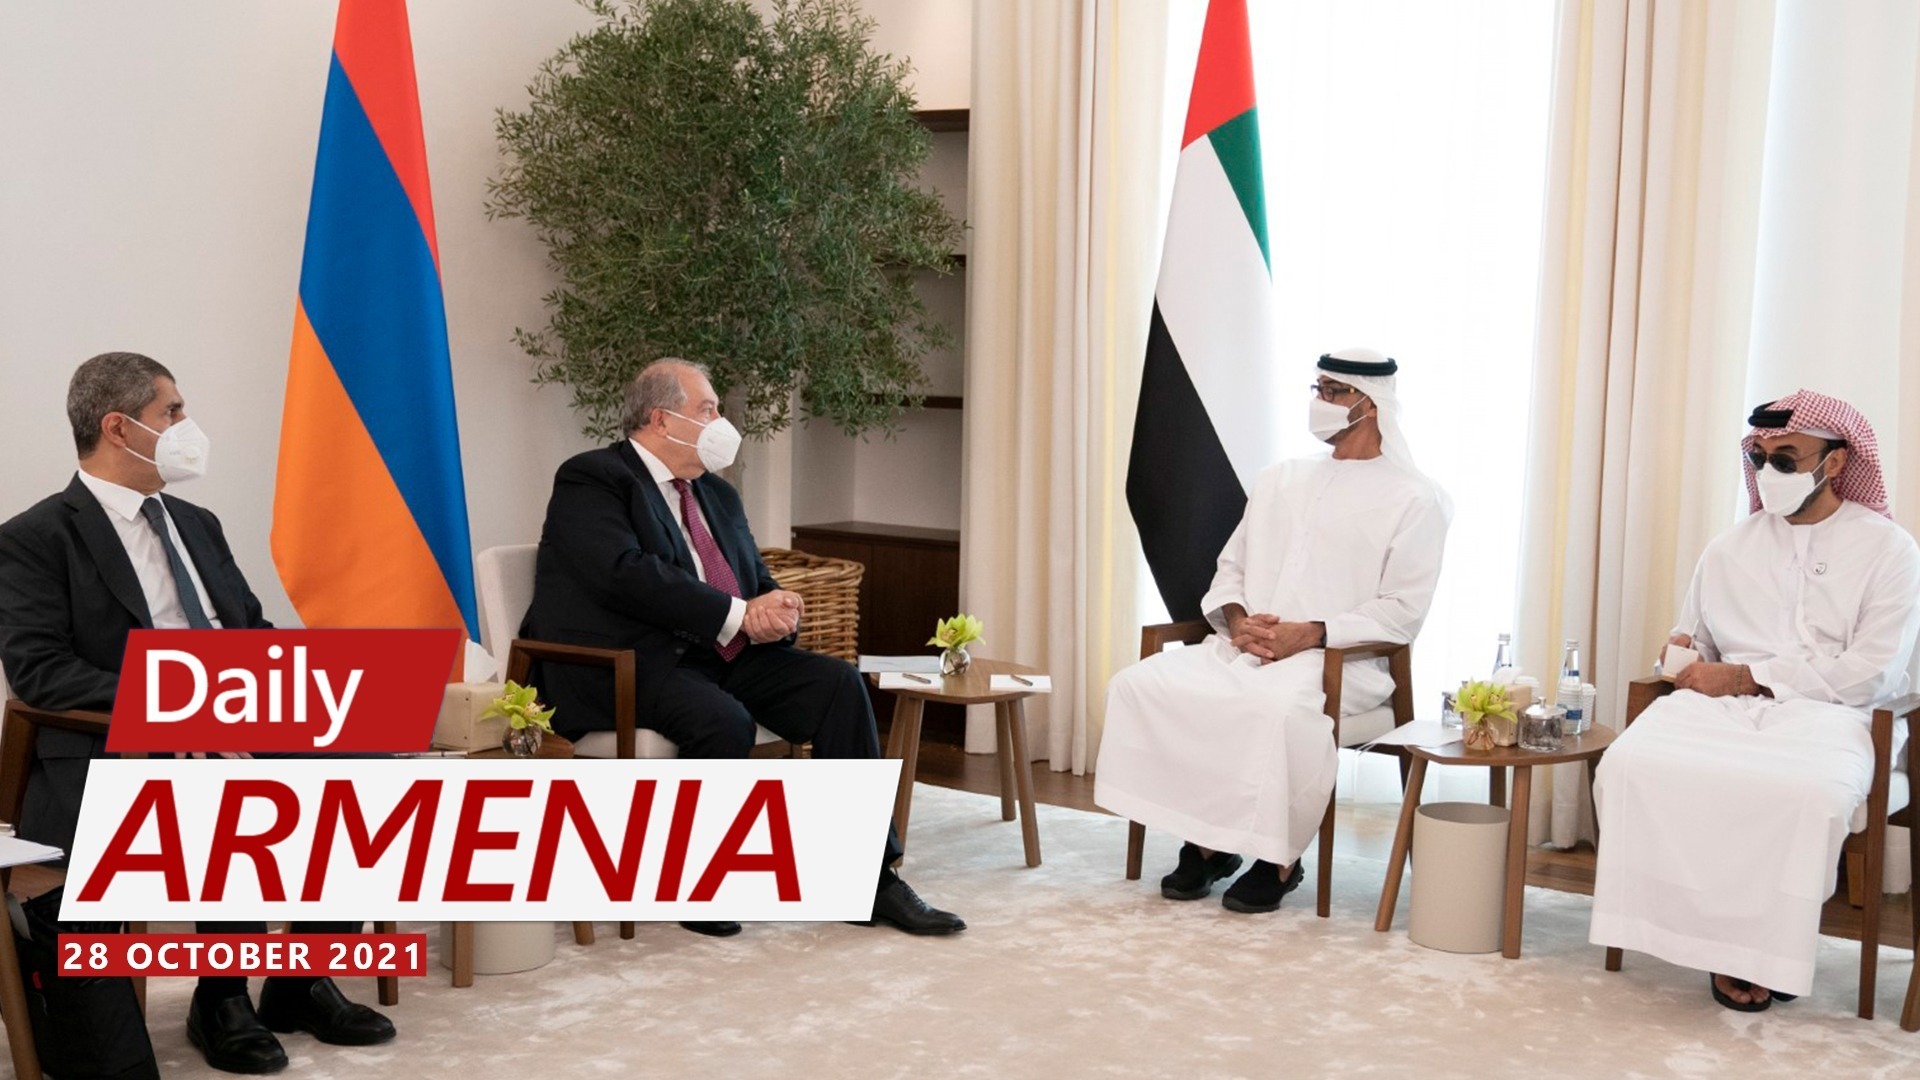 Armenian president holds talks with Emirati crown prince and Bahraini king